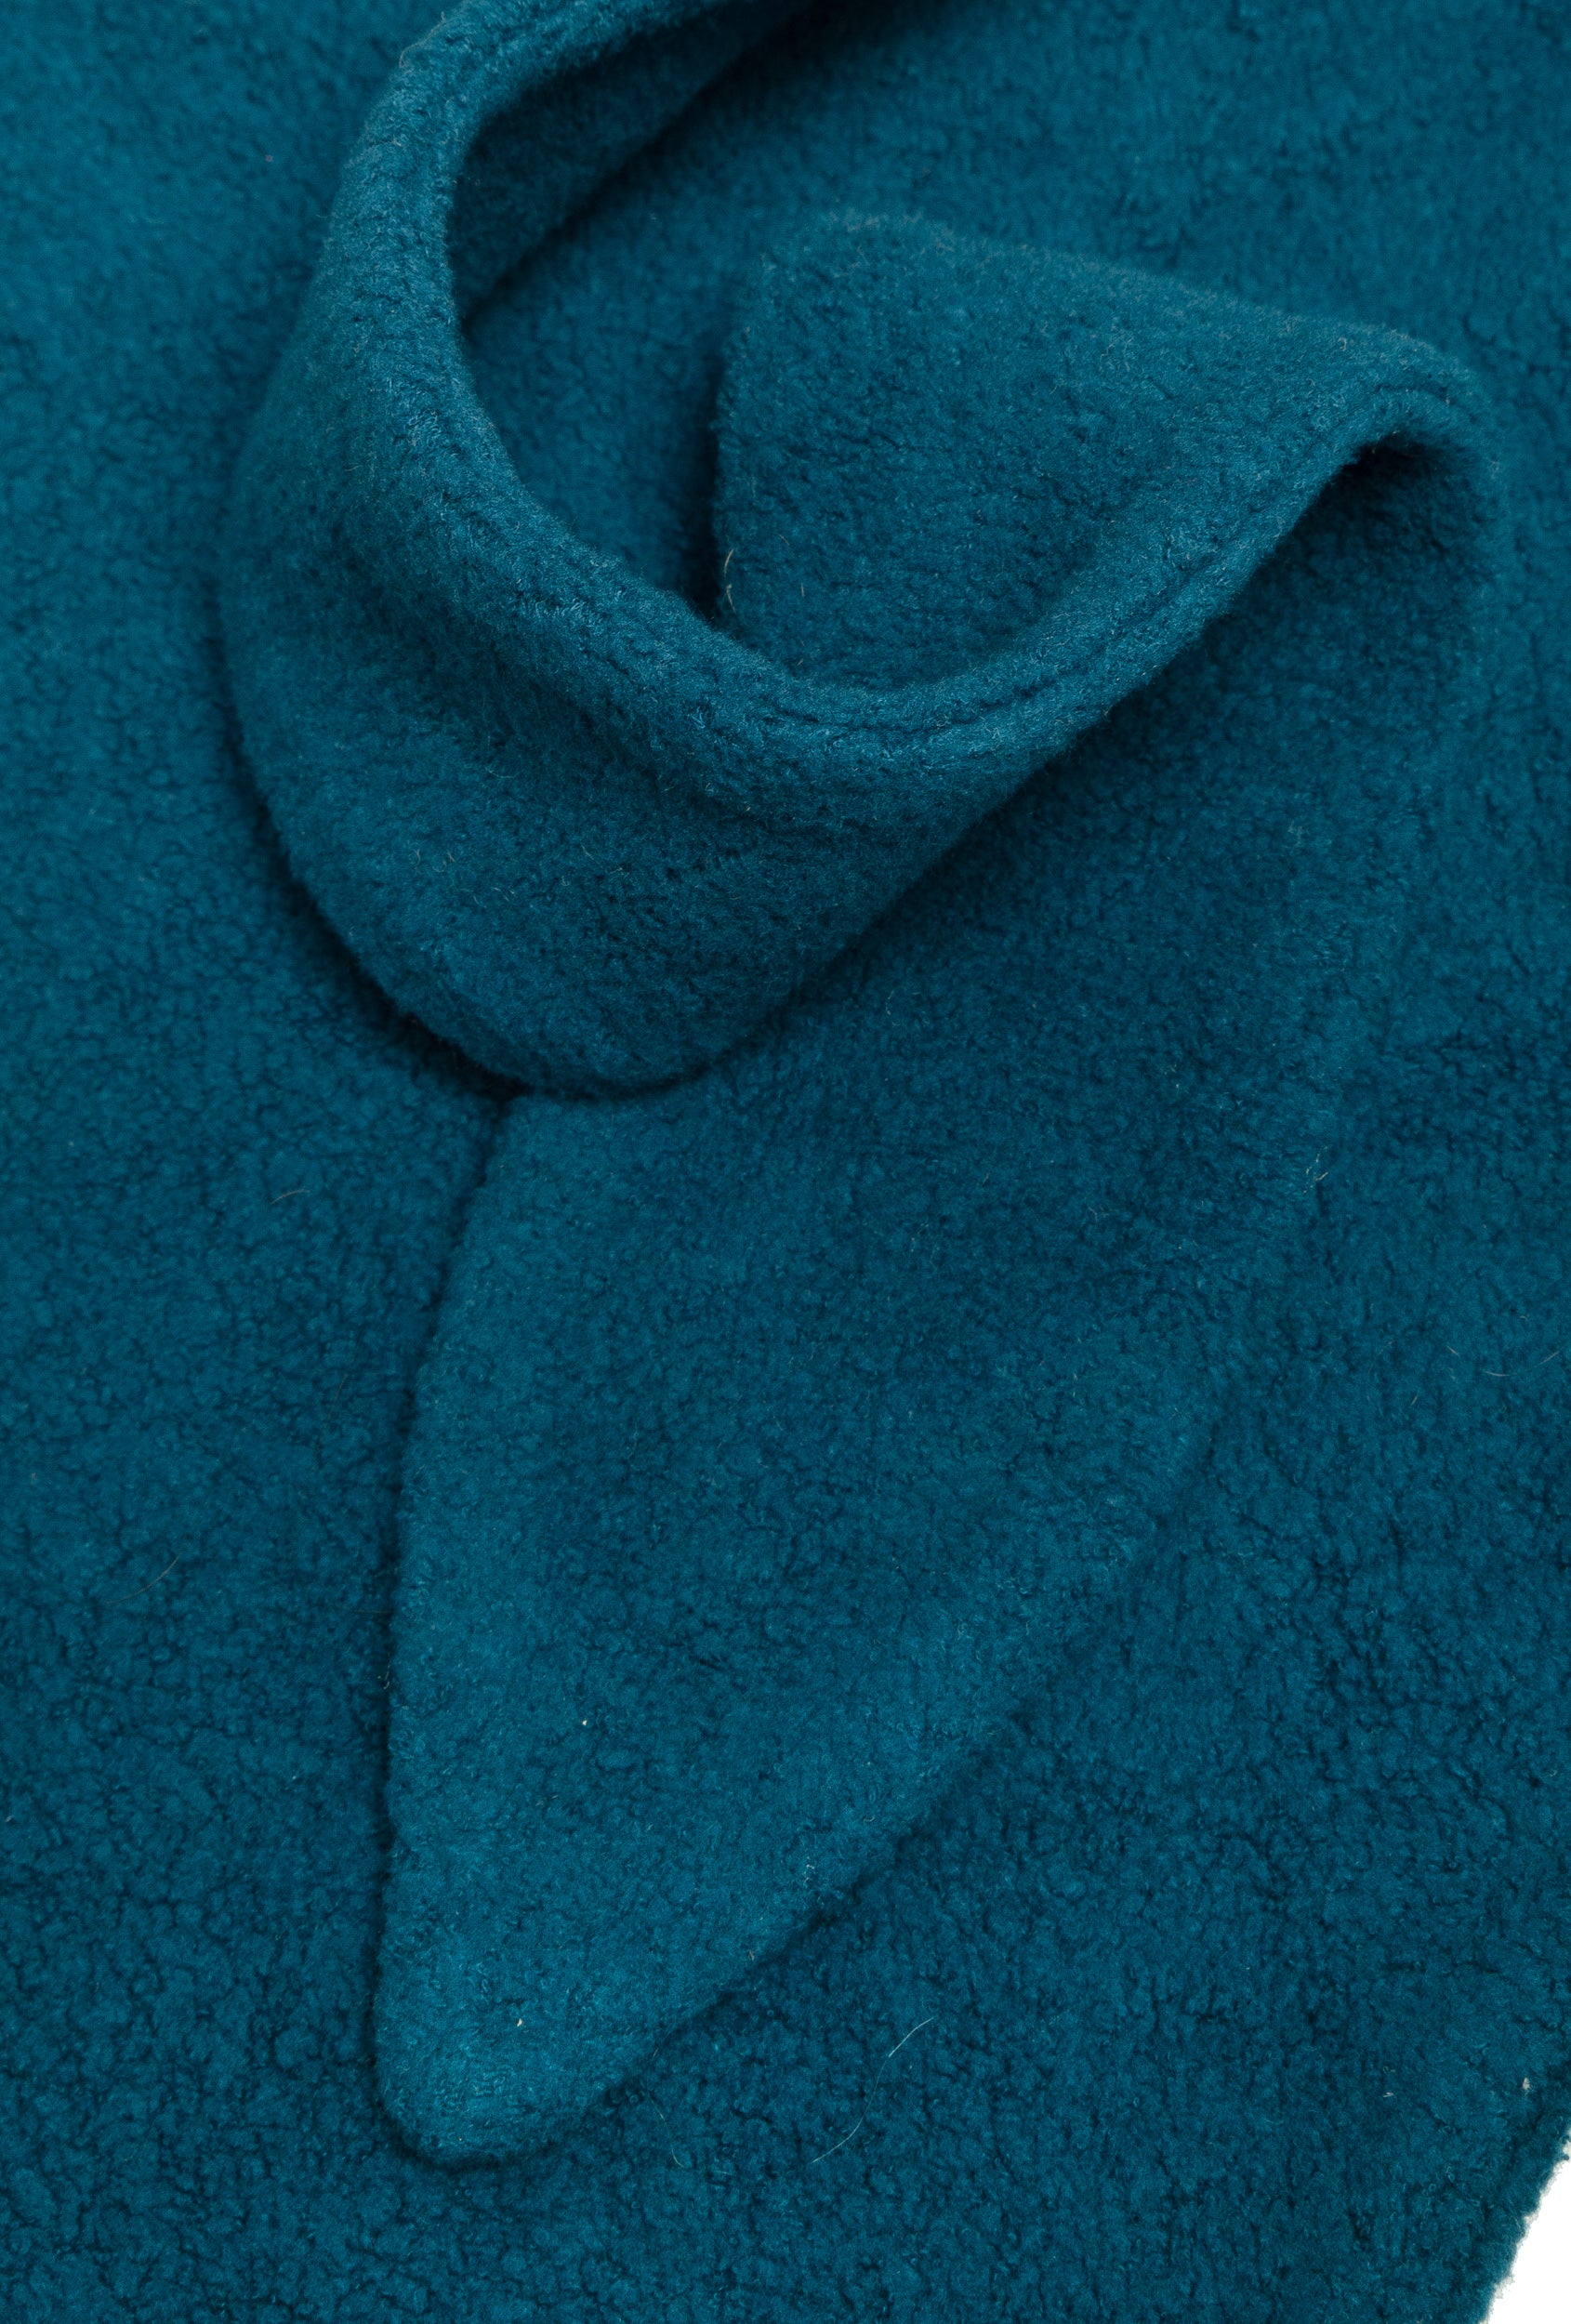 Fleece head scarf sea blue